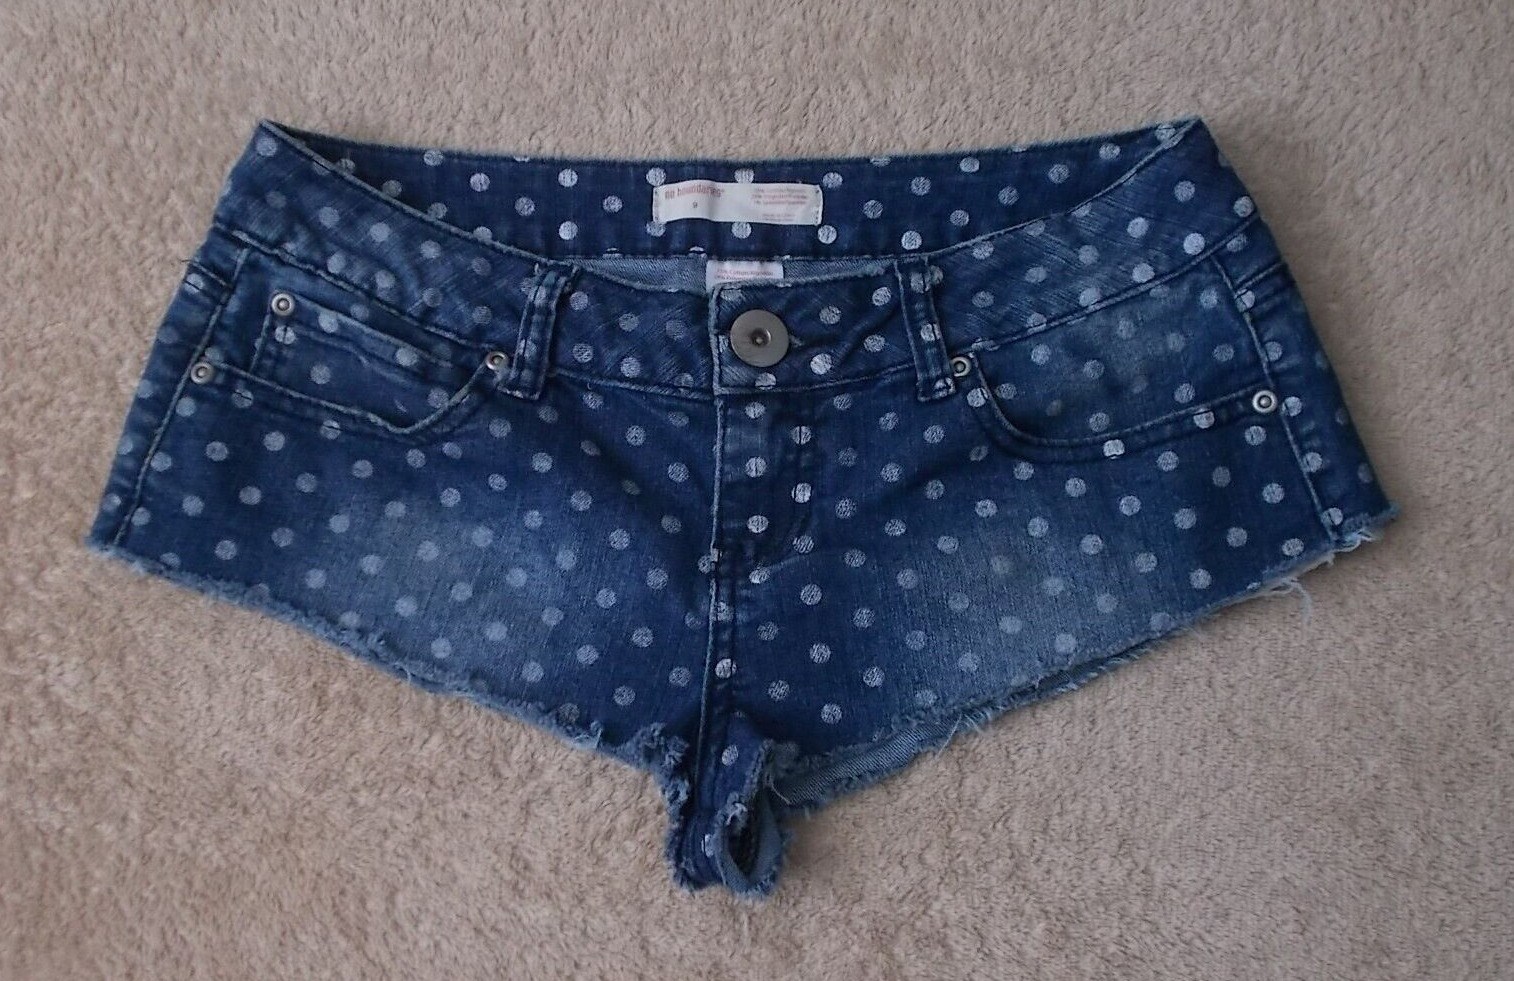 Denim micro mini shorts NOBO low rise polka dot stretch altered size 9 29 x 1 "